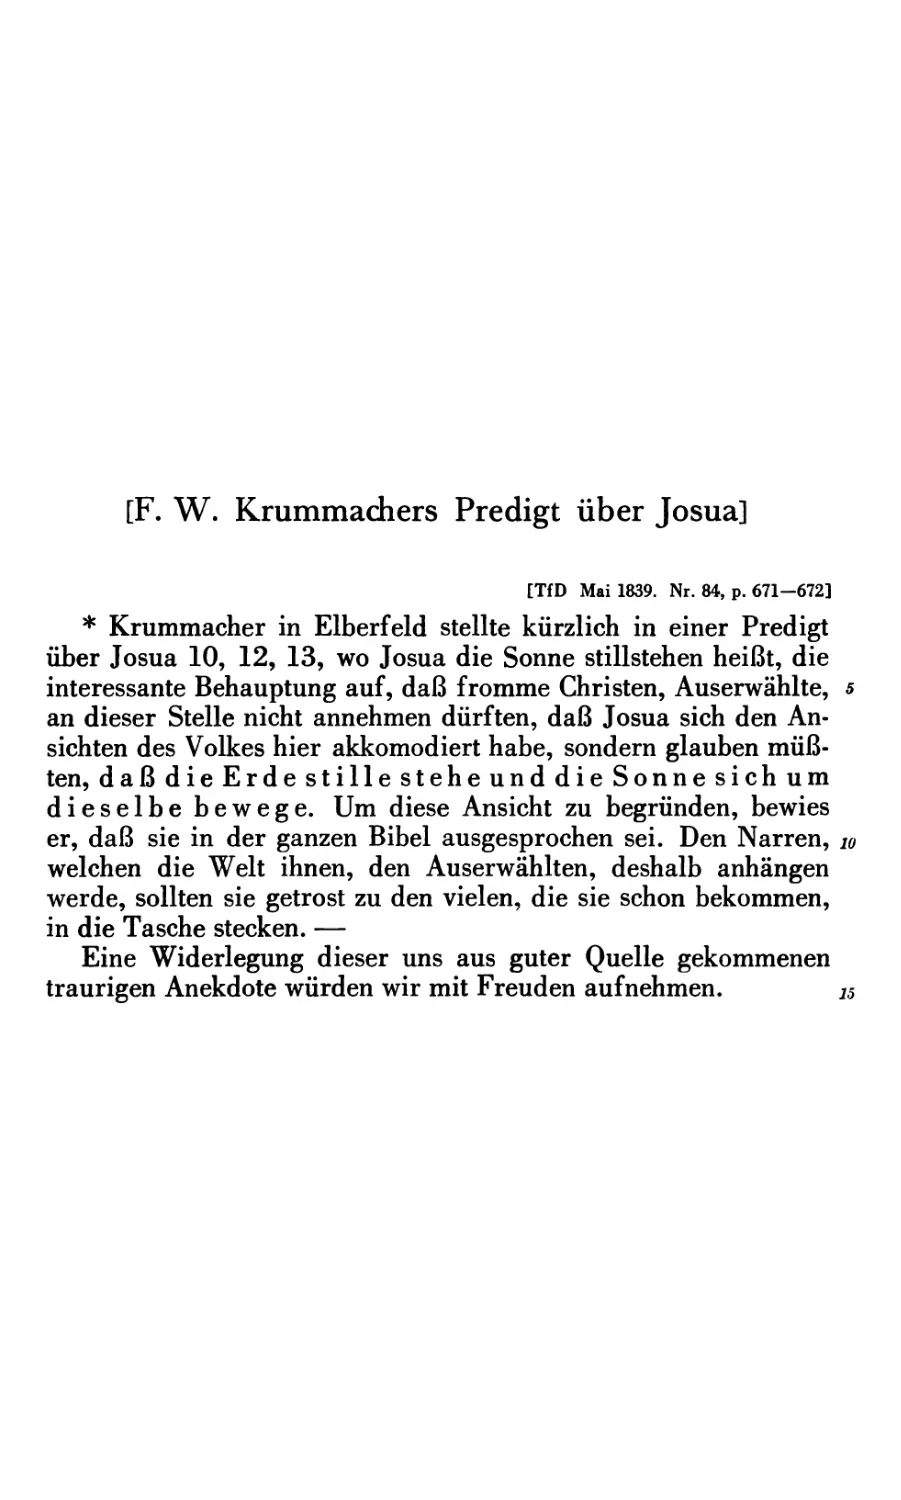 F. W. Krummachers Predigt über Josua